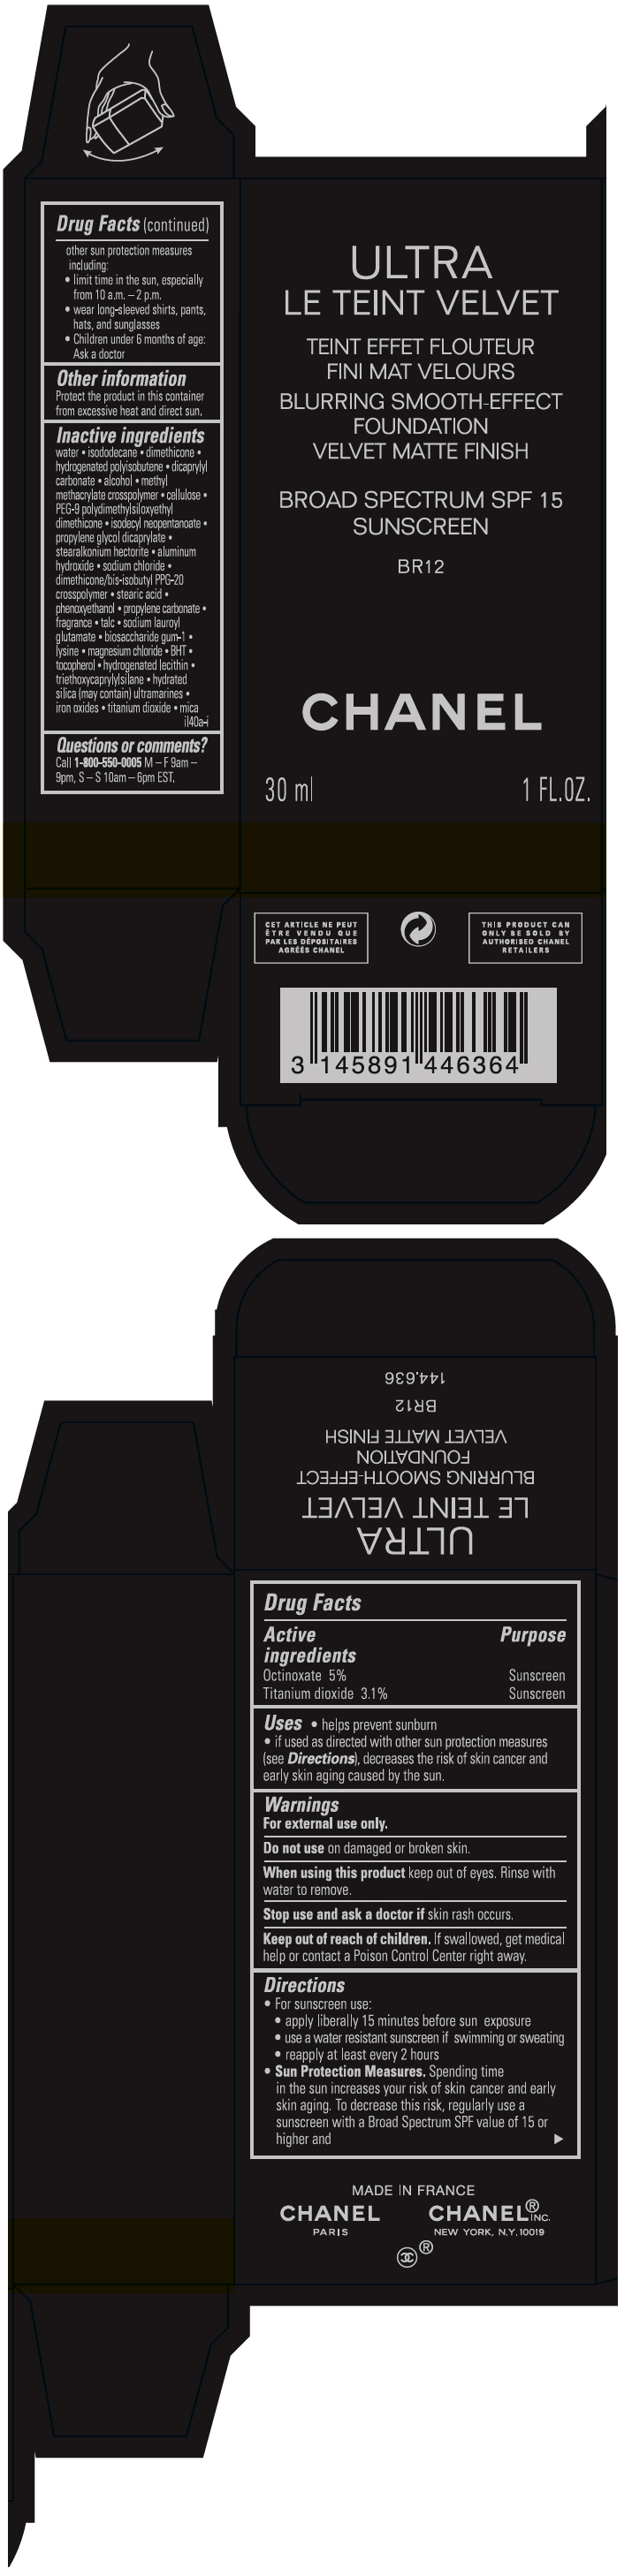 PRINCIPAL DISPLAY PANEL - 30 ml Bottle Carton - BR12